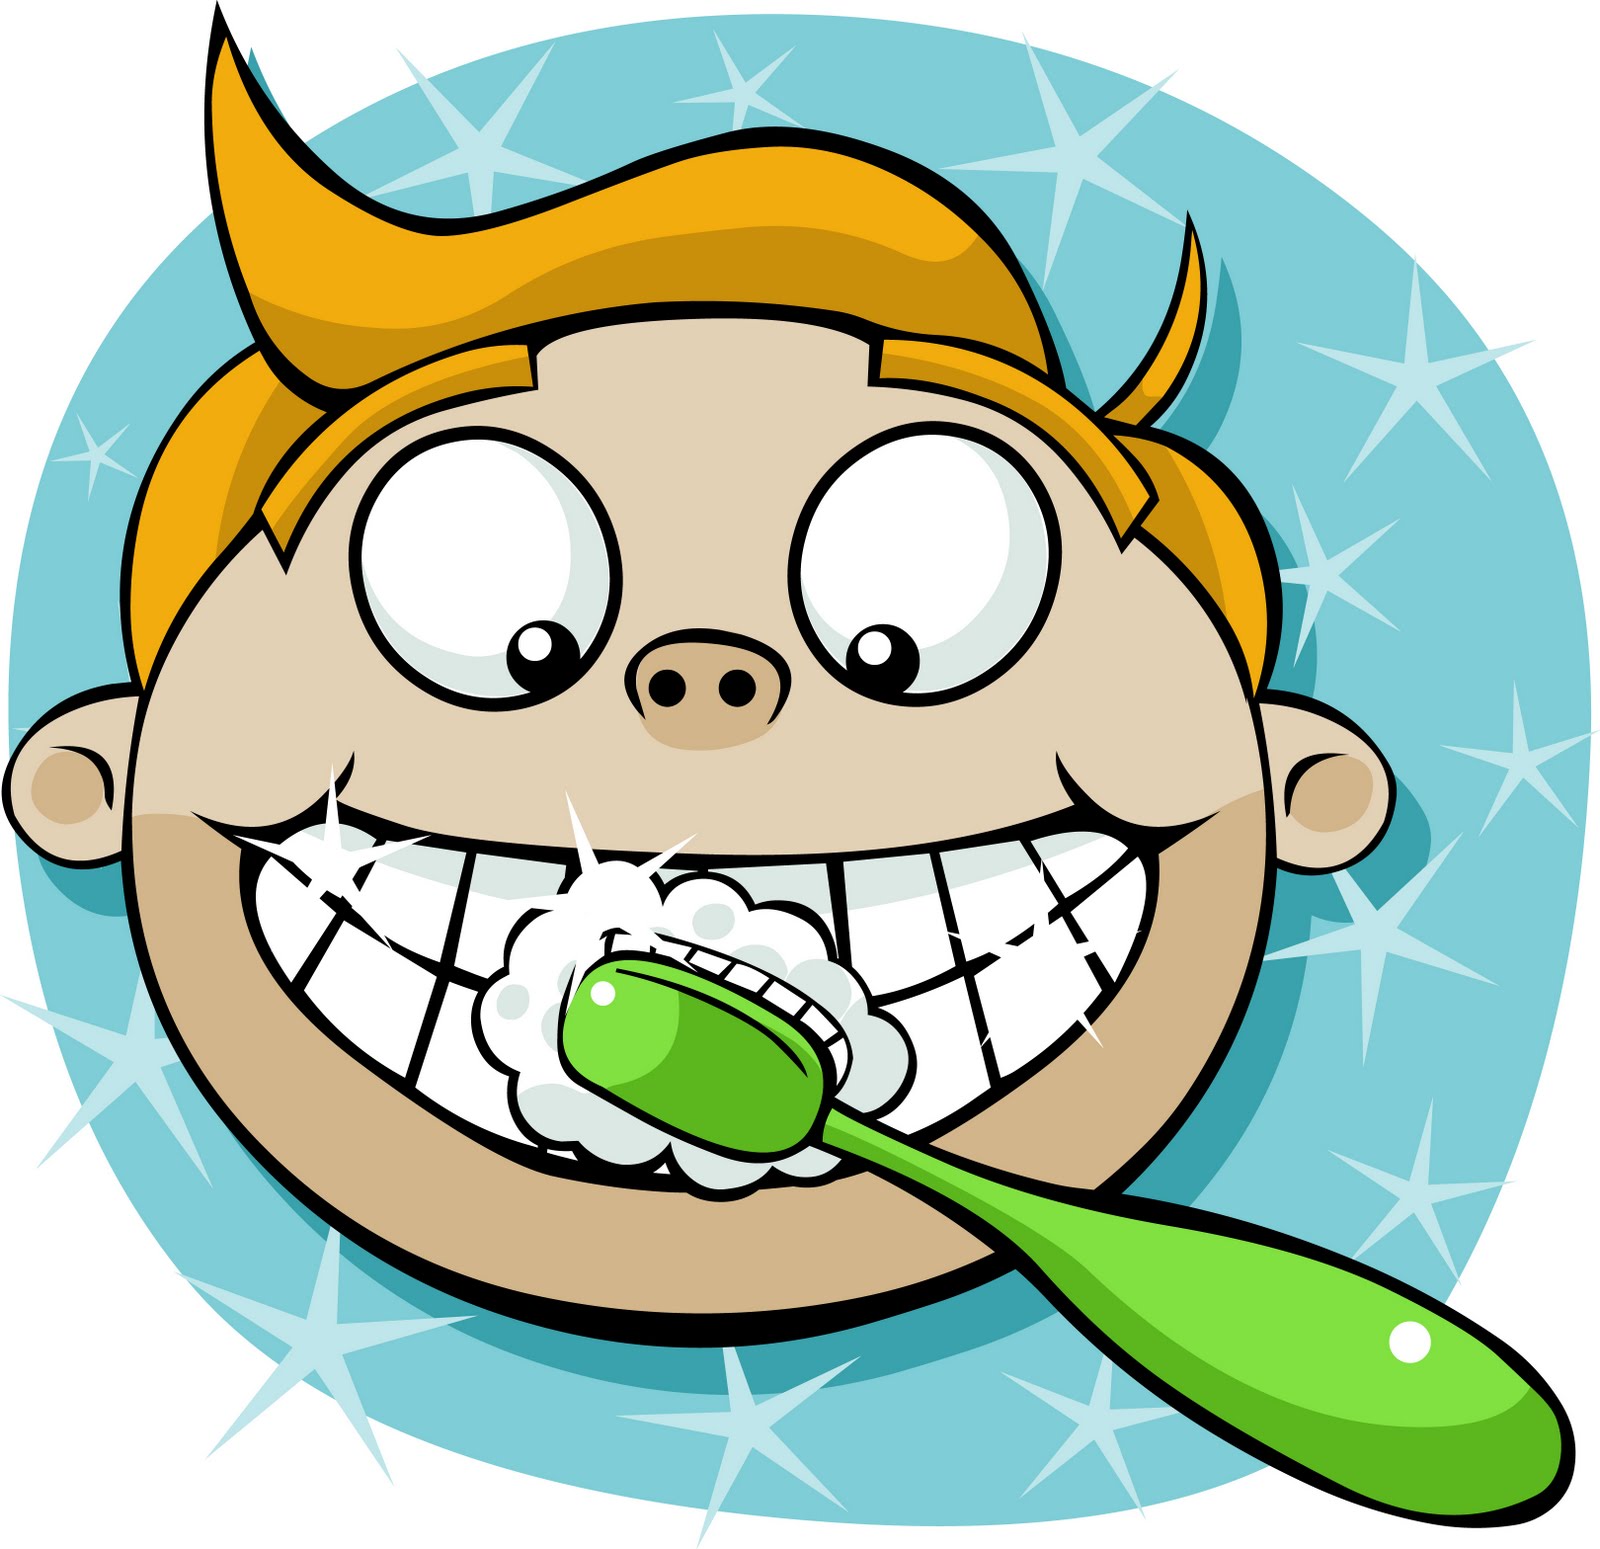 Brush teeth animated brushing teeth clip art danasrgd top